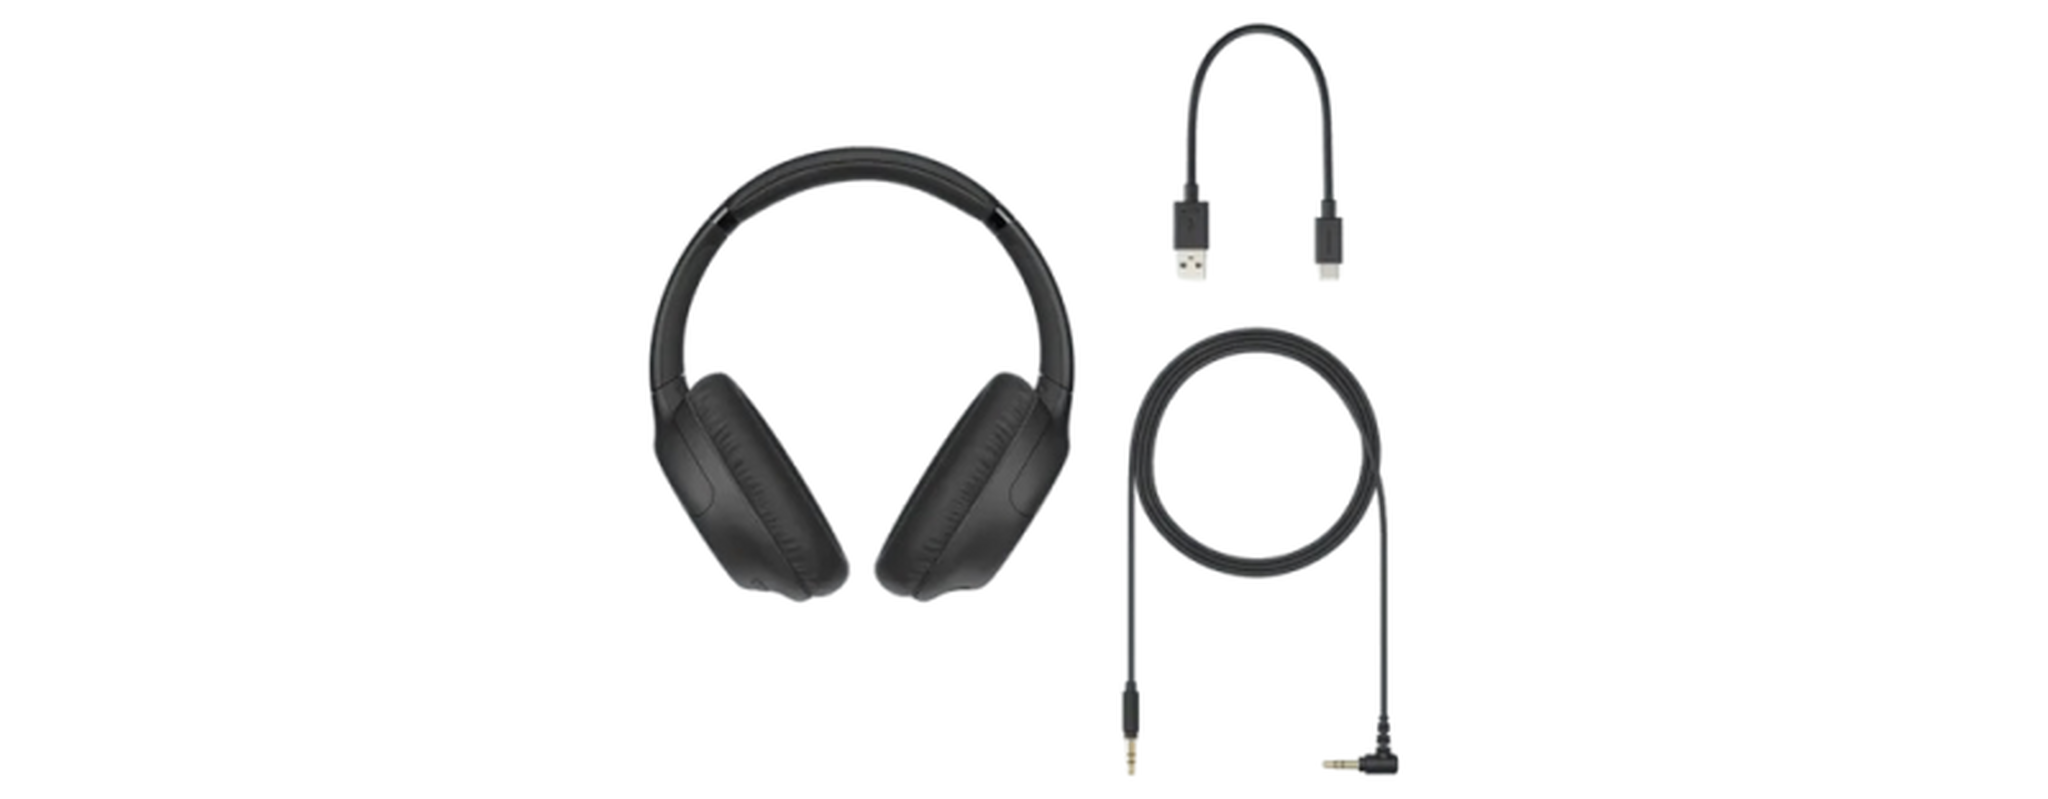 Sony Wireless Noise Canceling Headphone (WH-CH710N/BZ) – Black